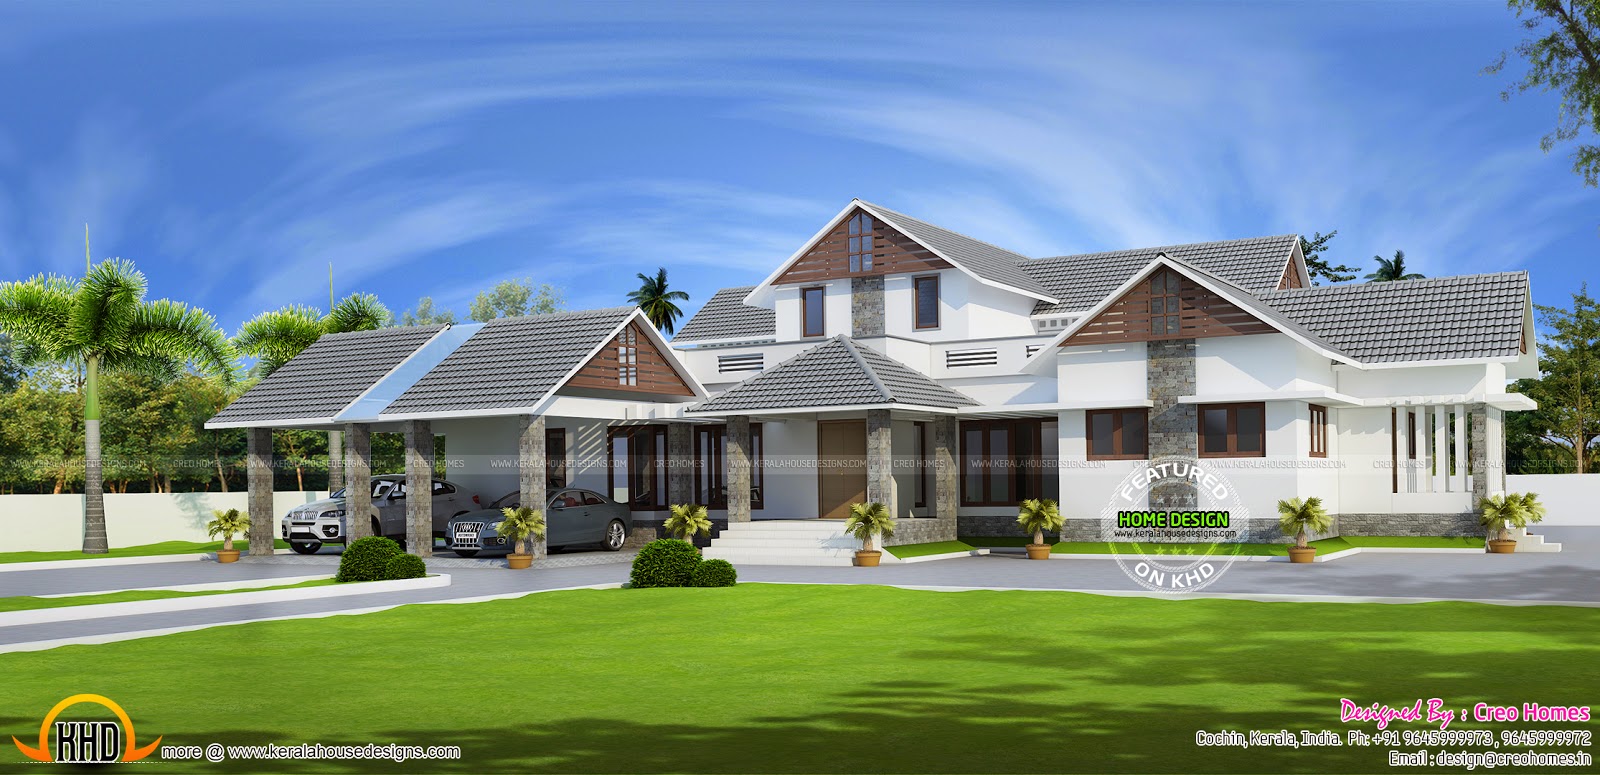 Large single floor house plan - Kerala home design and floor plans ...